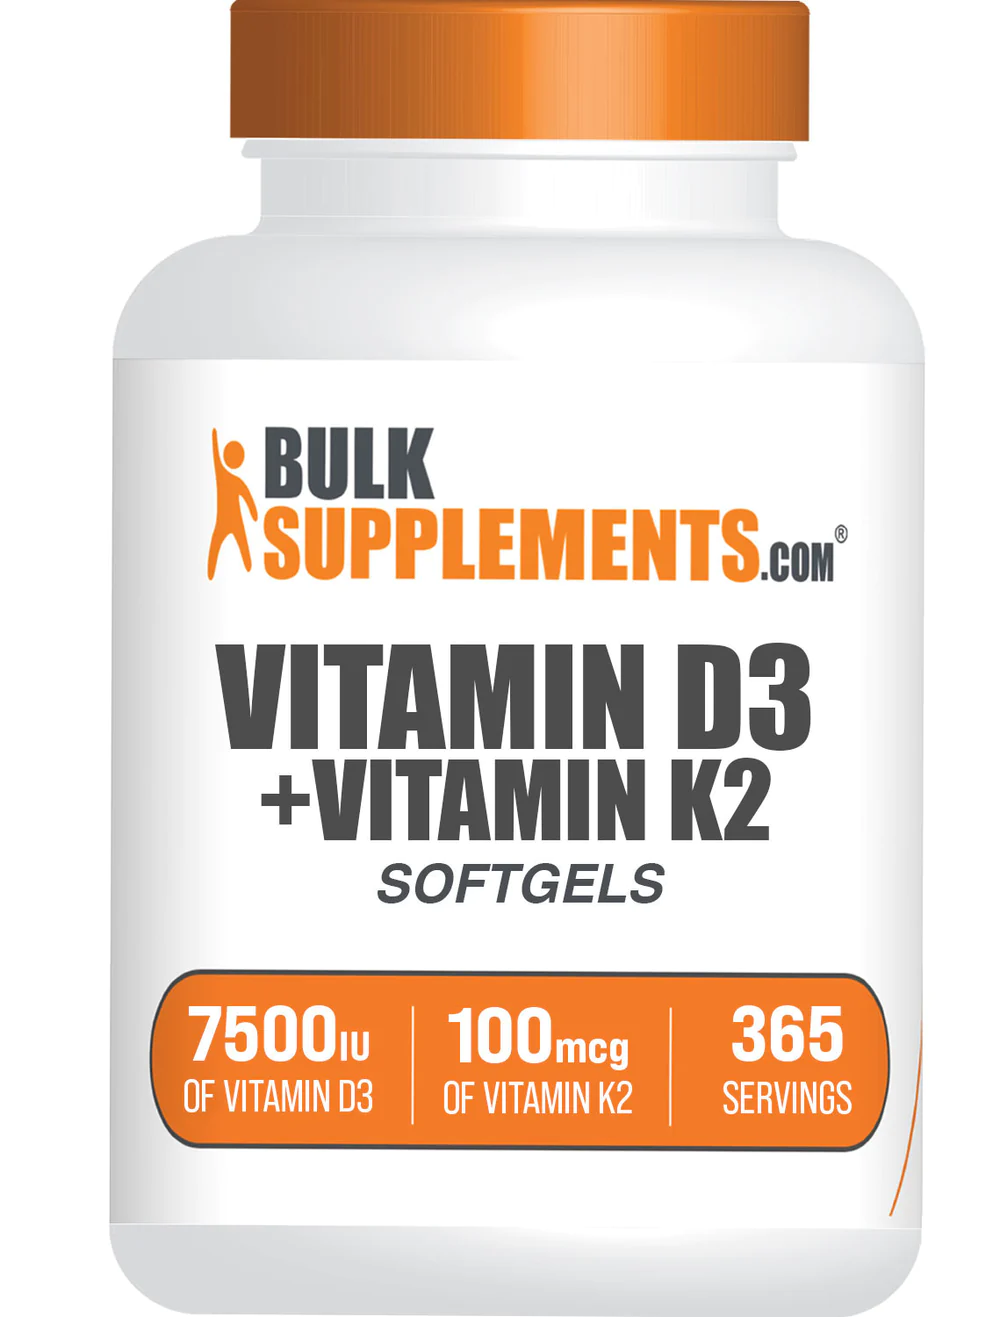 Vitamin D3+K2 combination by Bulksupplements